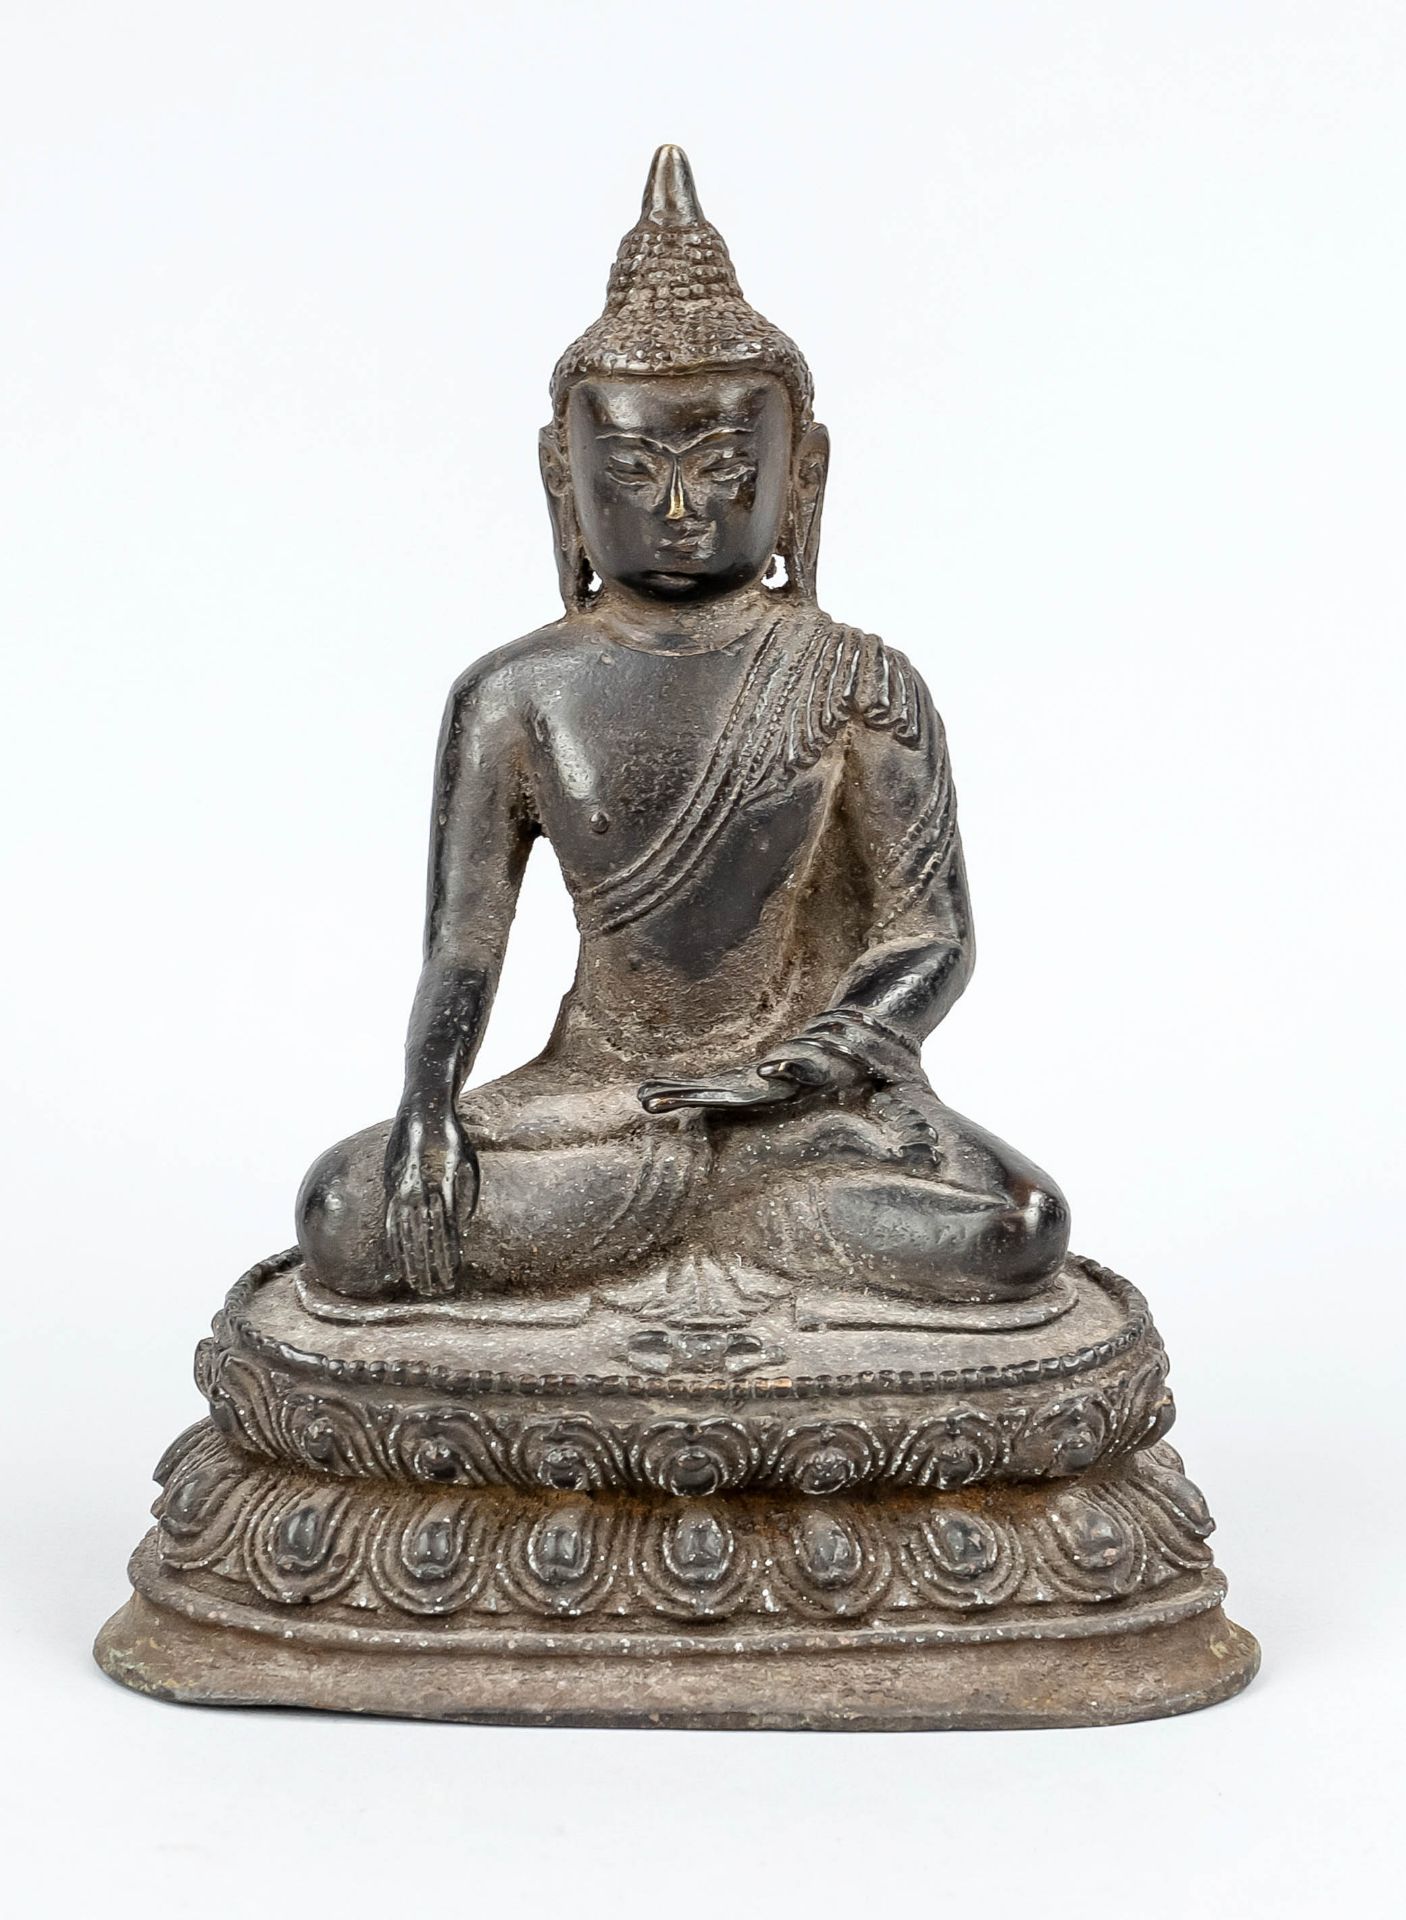 Buddha Shakyamuni in Qianlong style, China, Qing dynasty(1644-1912) 19th century, bronze, historical